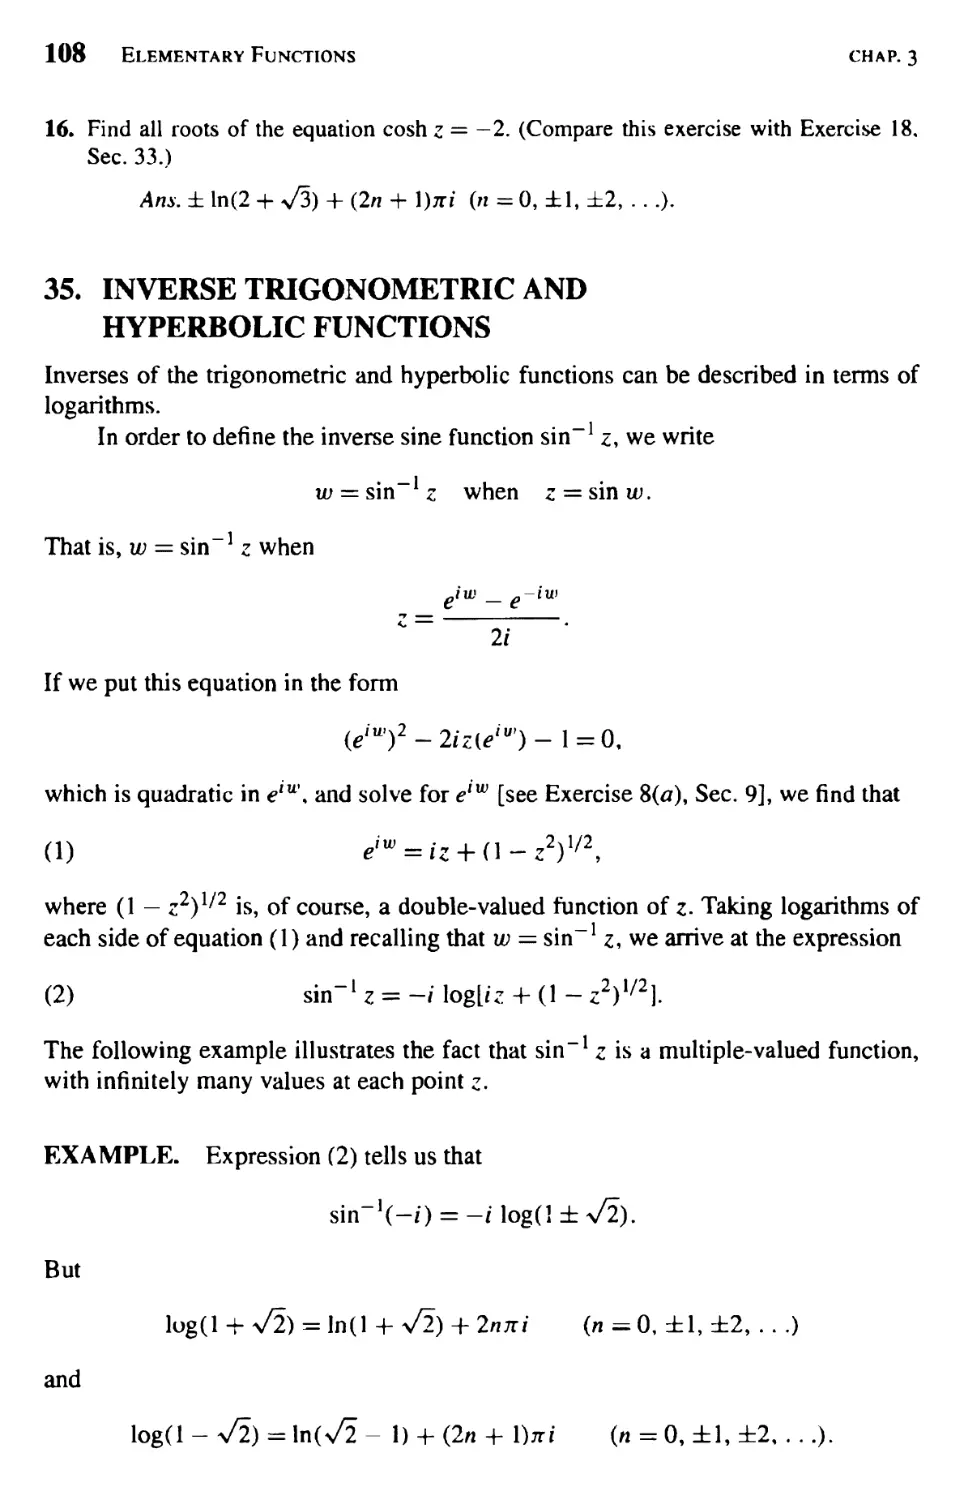 Inverse Trigonometric and Hyperbolic Functions